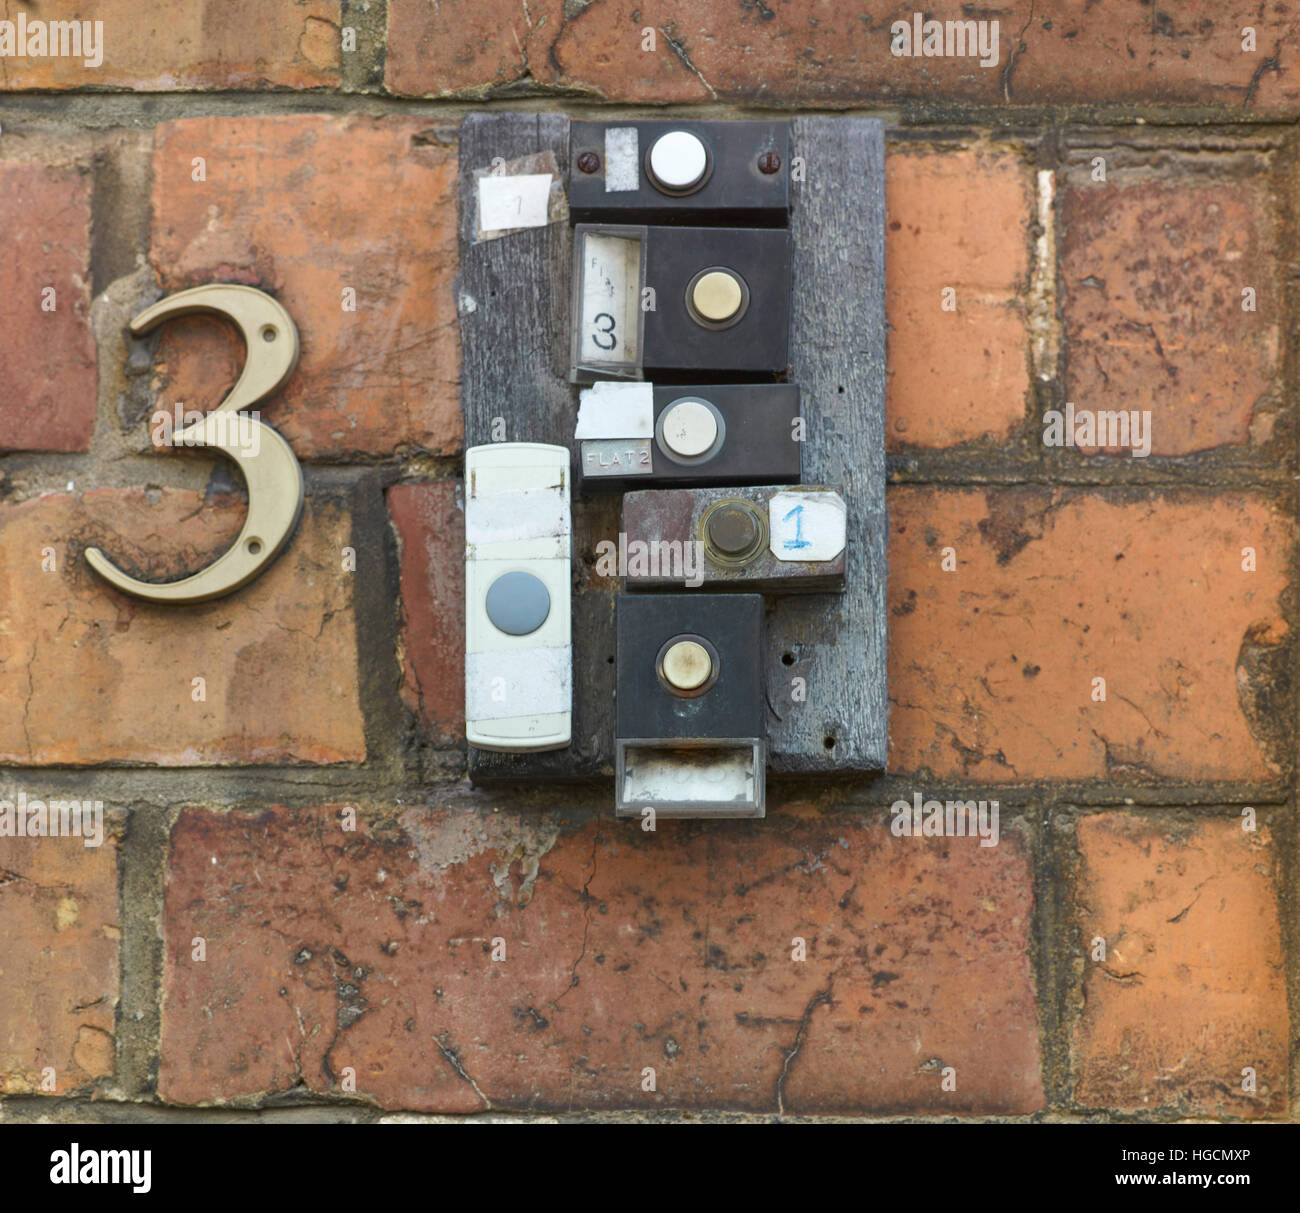 6 doorbells on a brick wall Stock Photo